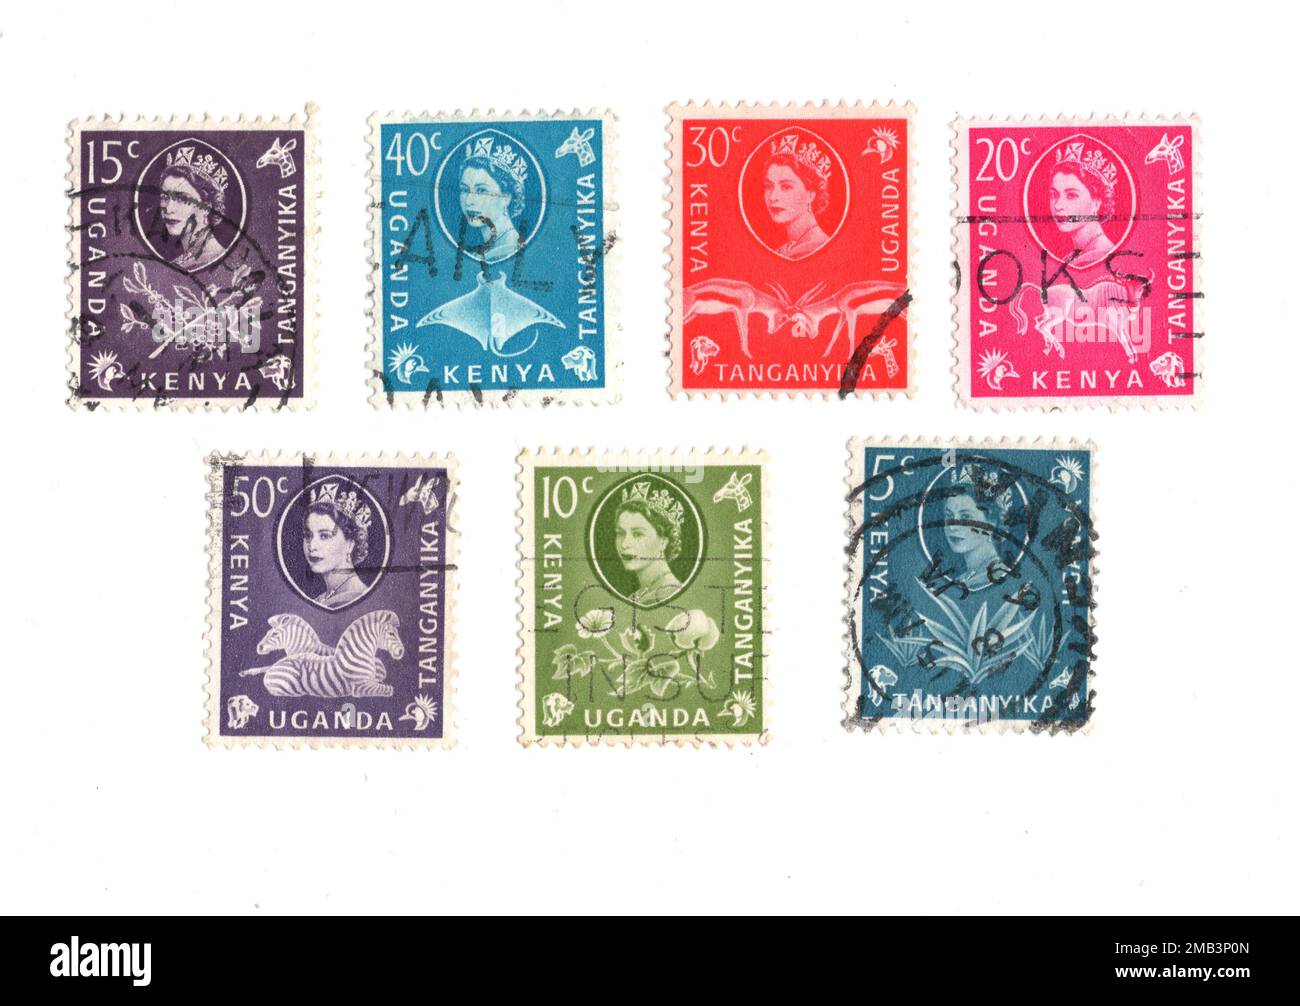 Vintage postage stamps from Kenya, Uganda and Tanganyika on a white background. Stock Photo